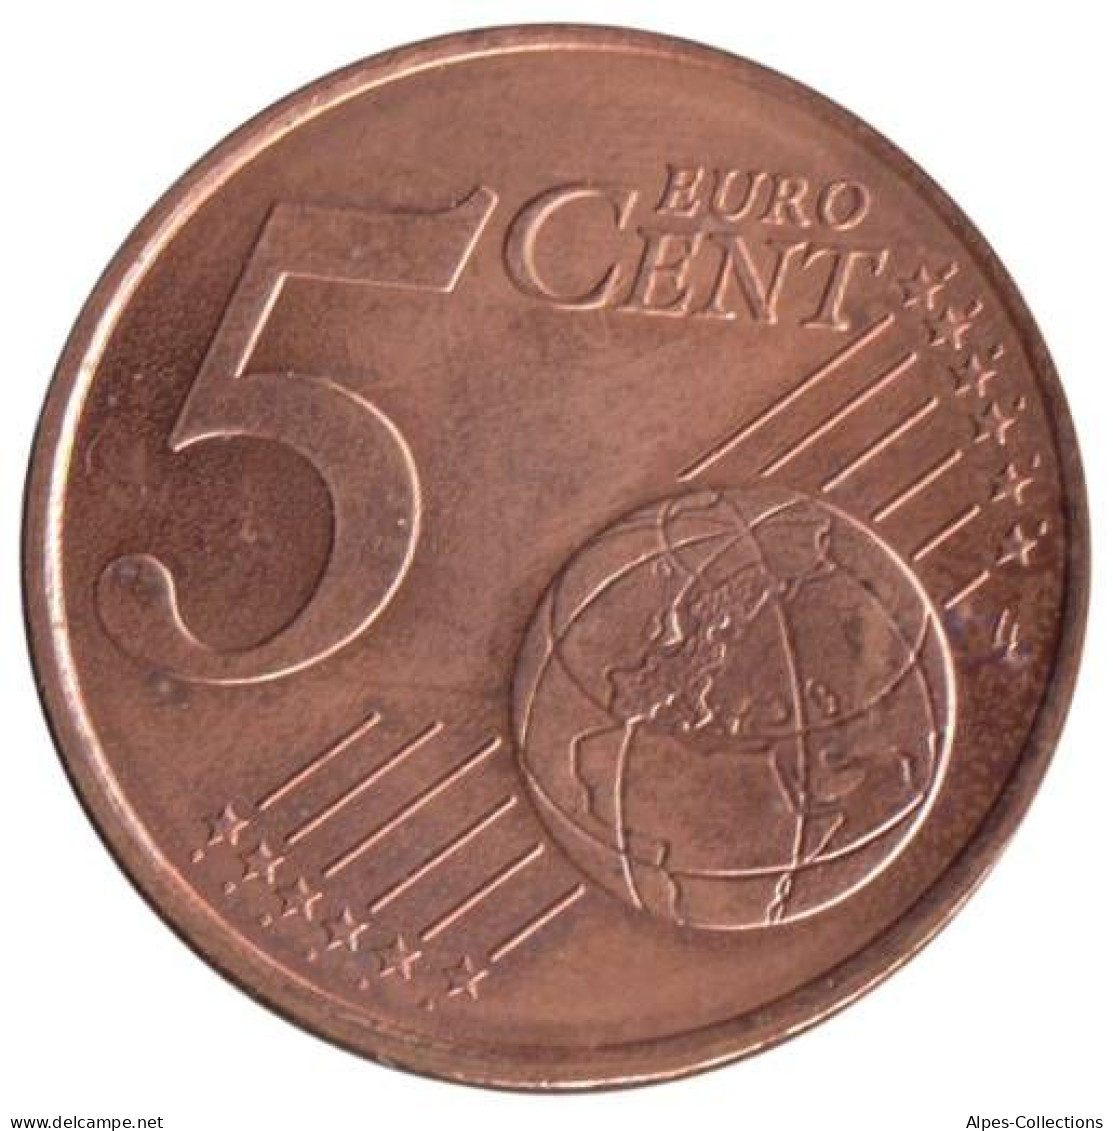 FR00502.1 - FRANCE - 5 Cents - 2002 - Frankreich